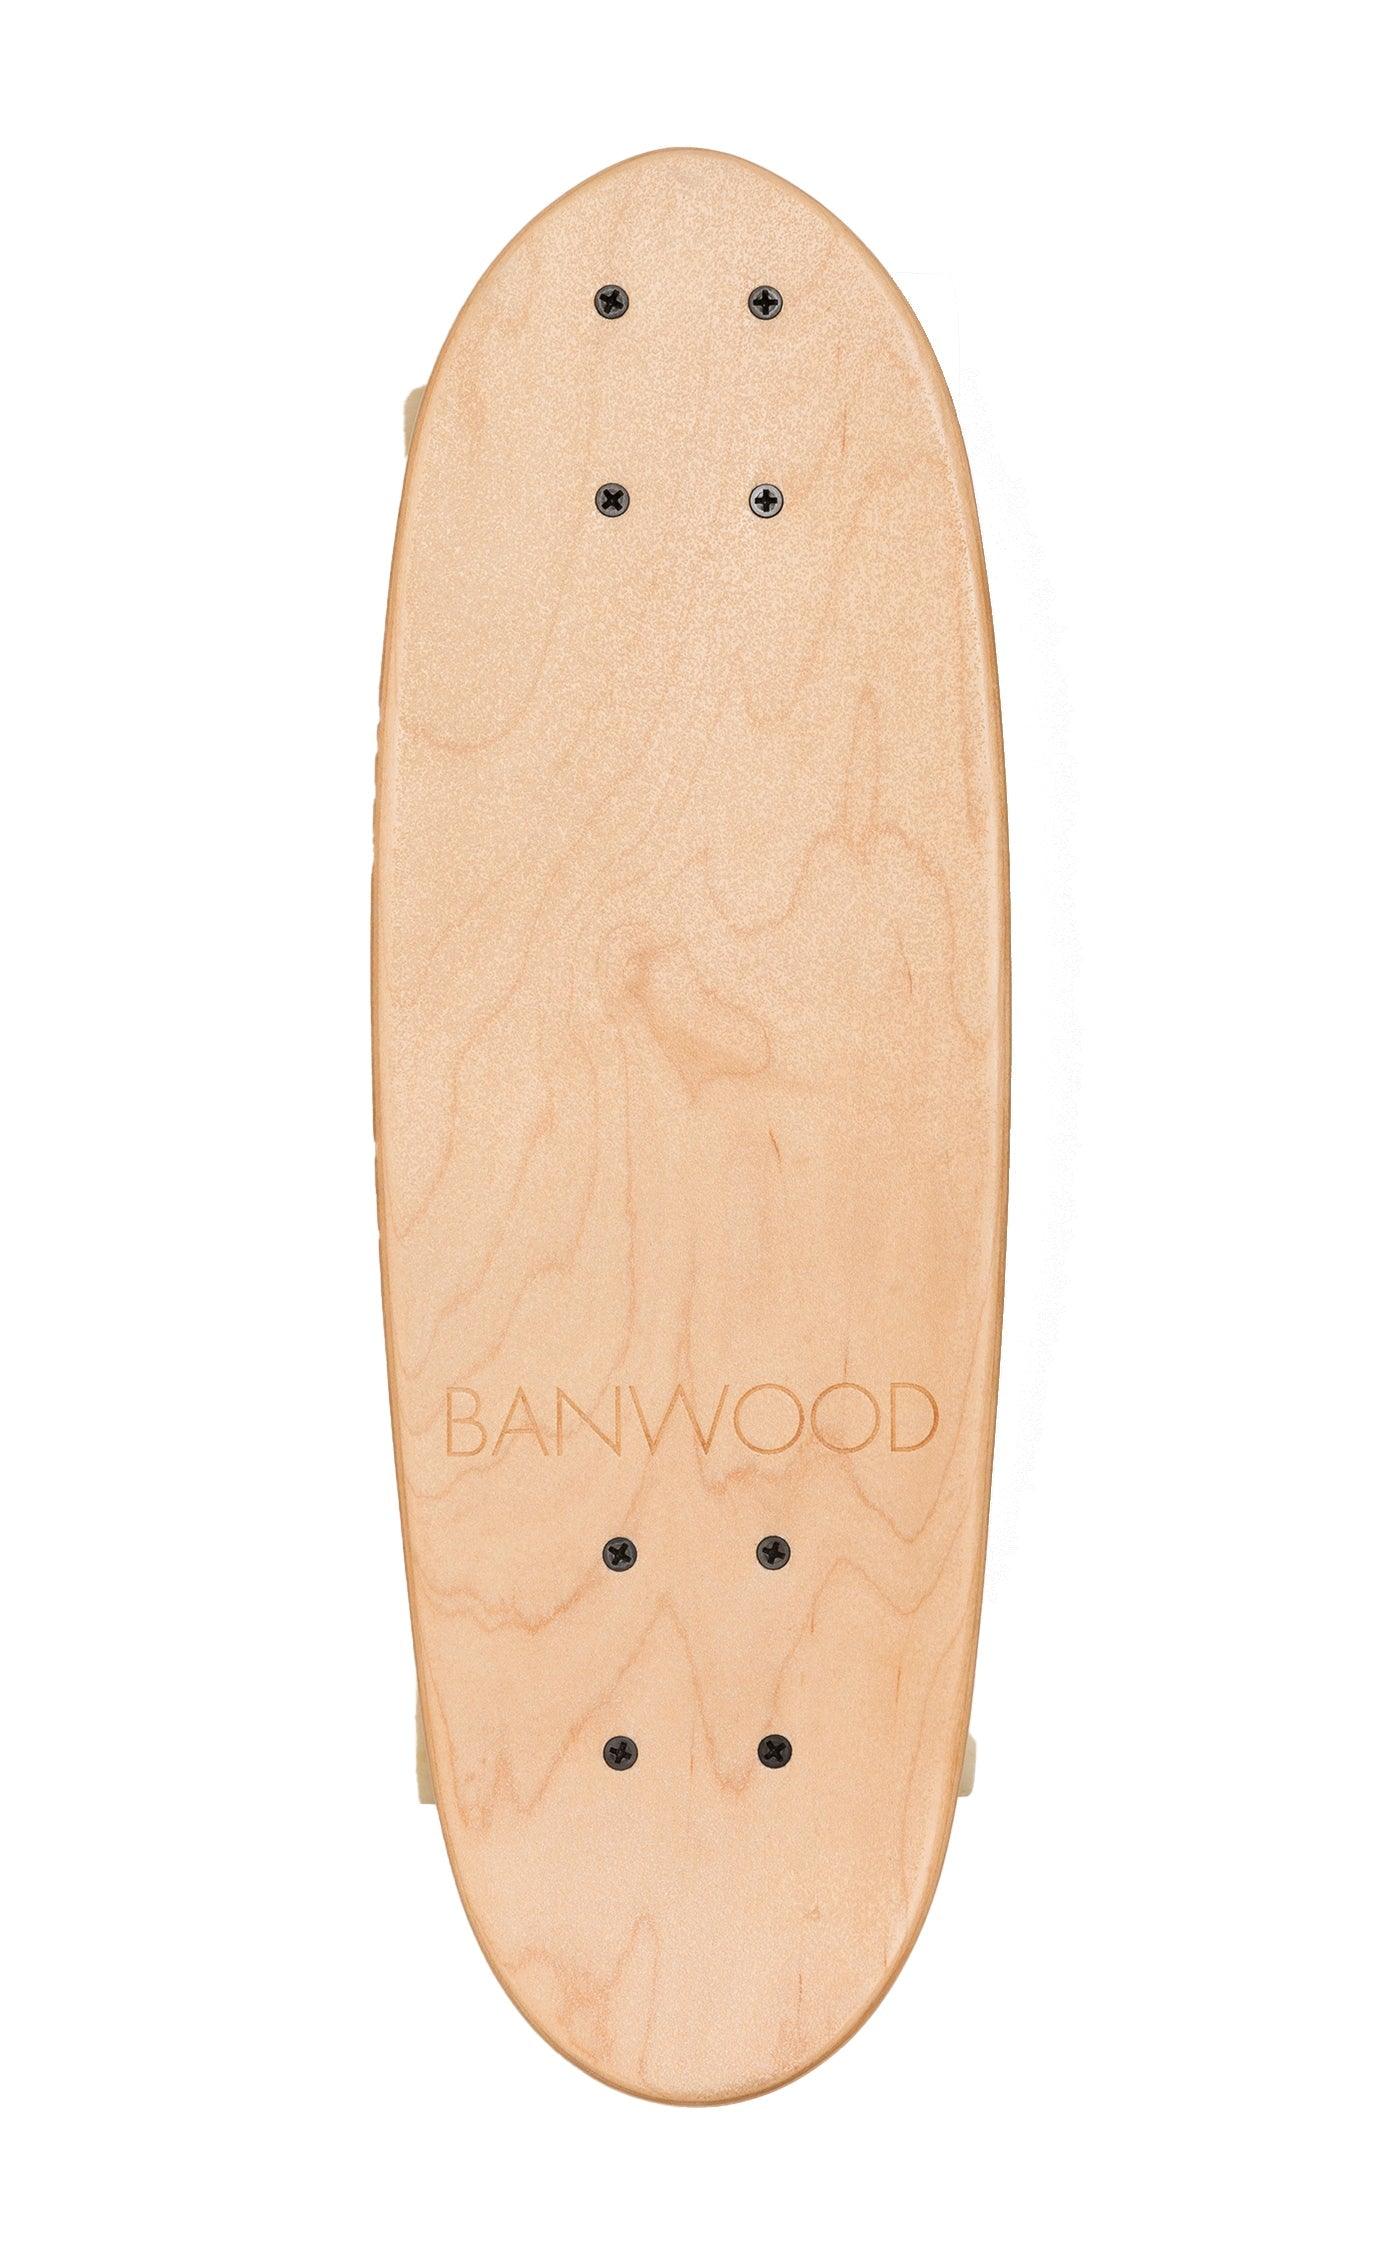 Banwood Skateboard - Why and Whale